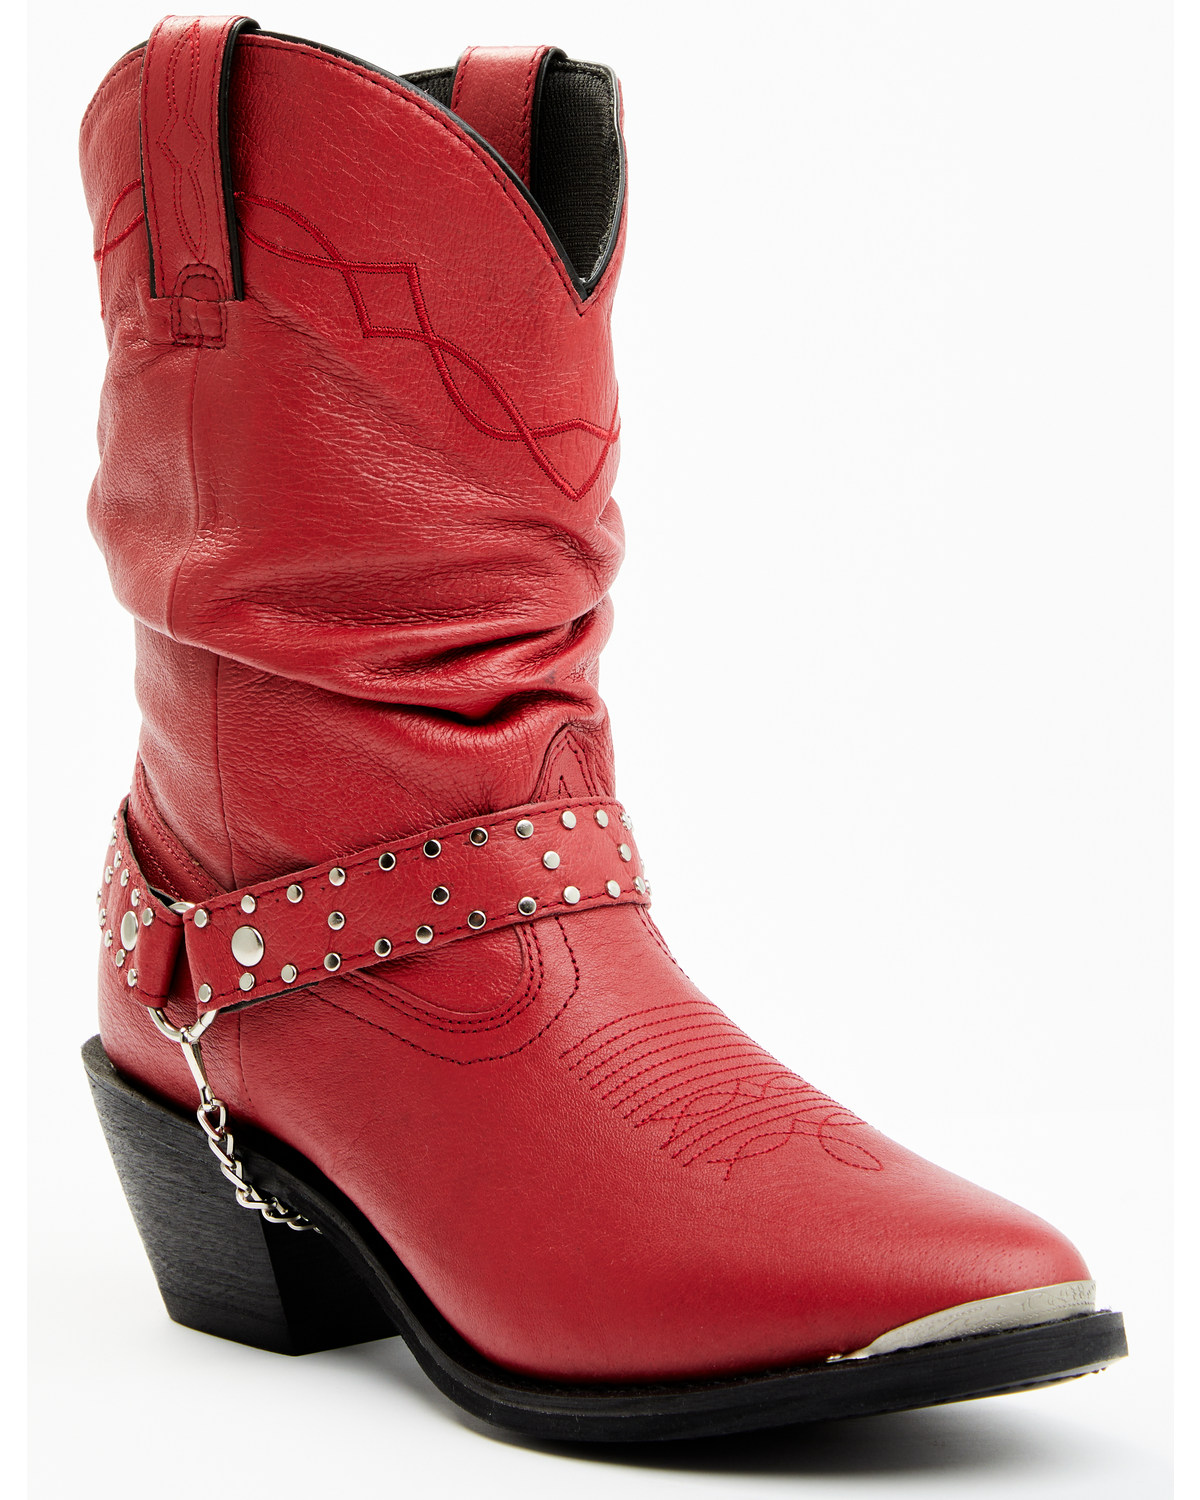 Shyanne Women's Ally Slouch Harness Fashion Boots - Medium Toe